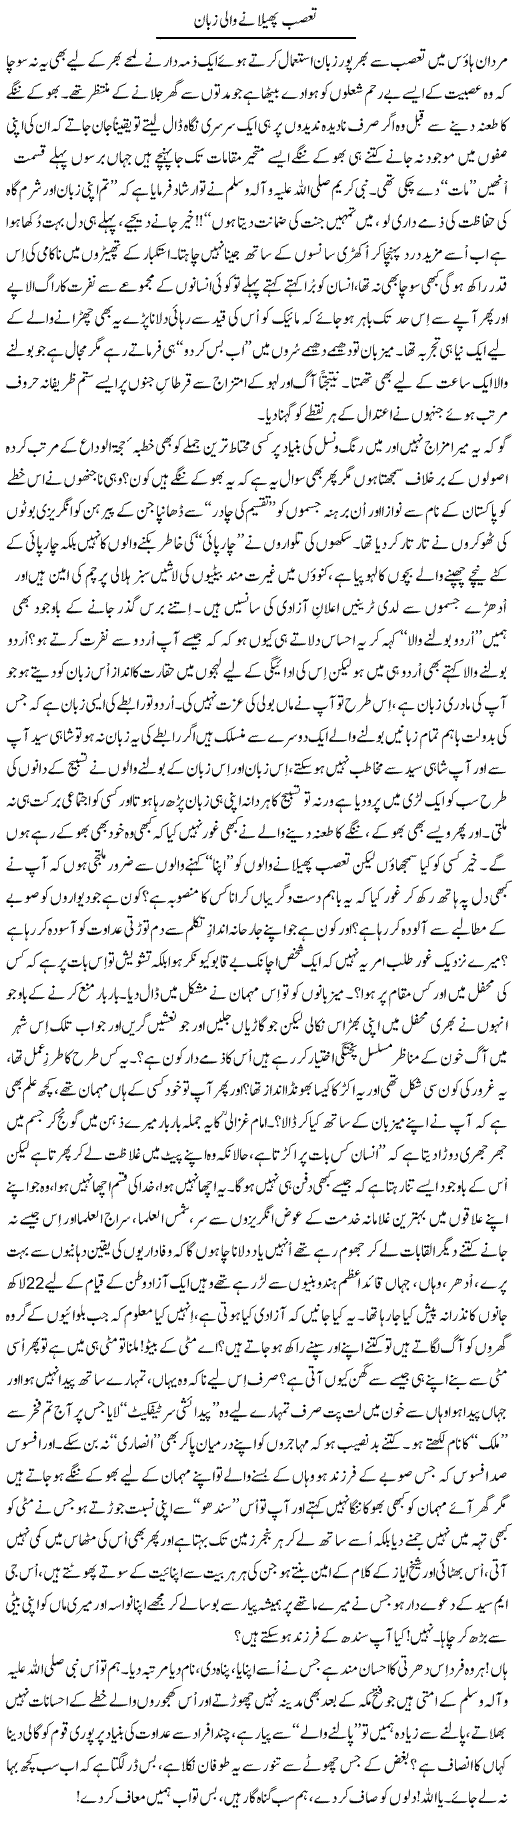 Statement of Zulfiqar Mirza - Urdu Column